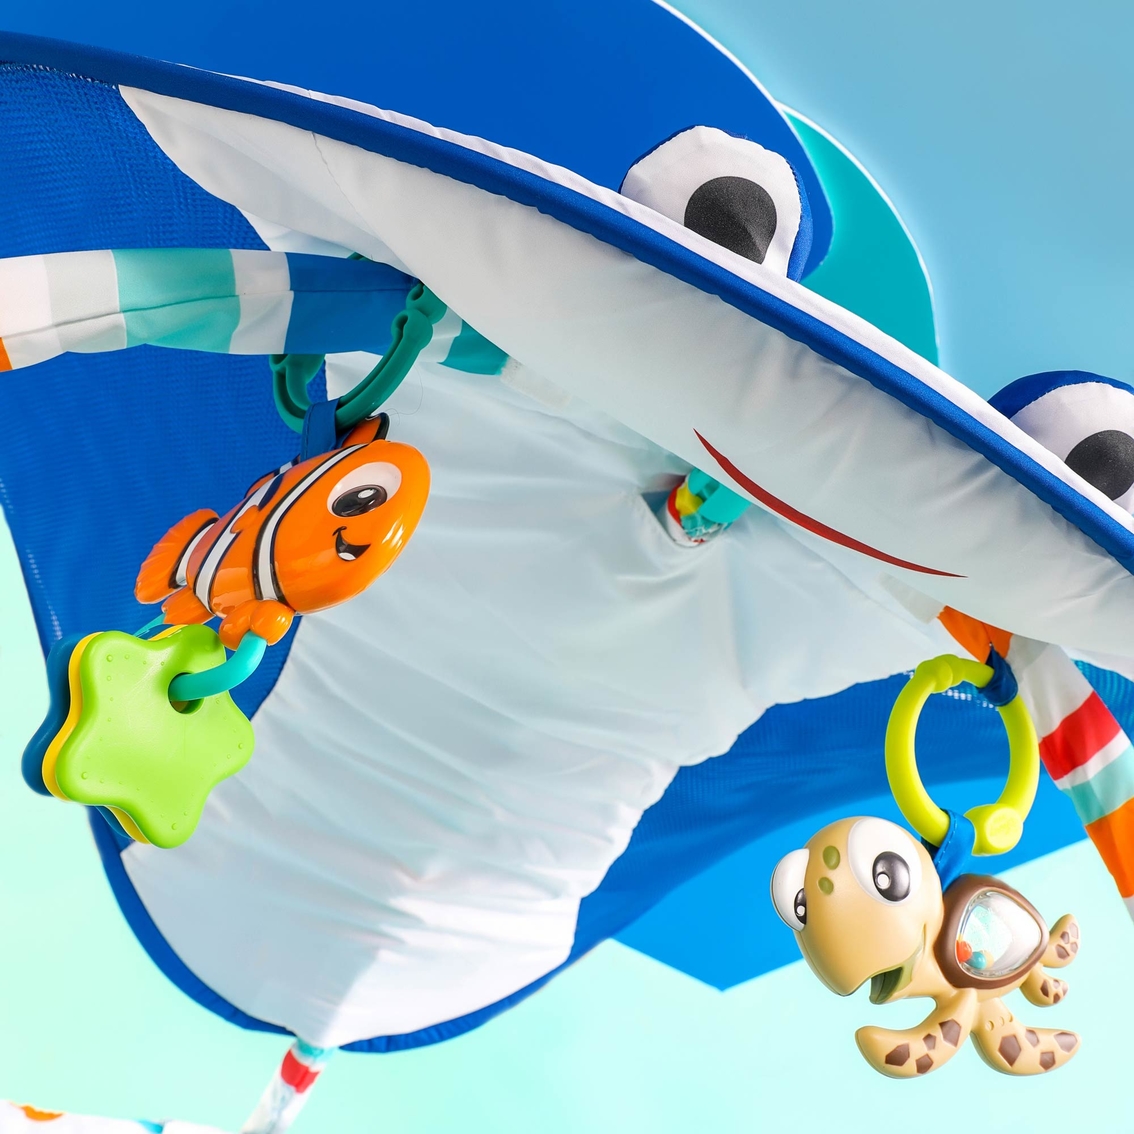 Disney Baby Finding Nemo Mr. Ray's Ocean Lights Gym - Image 10 of 10